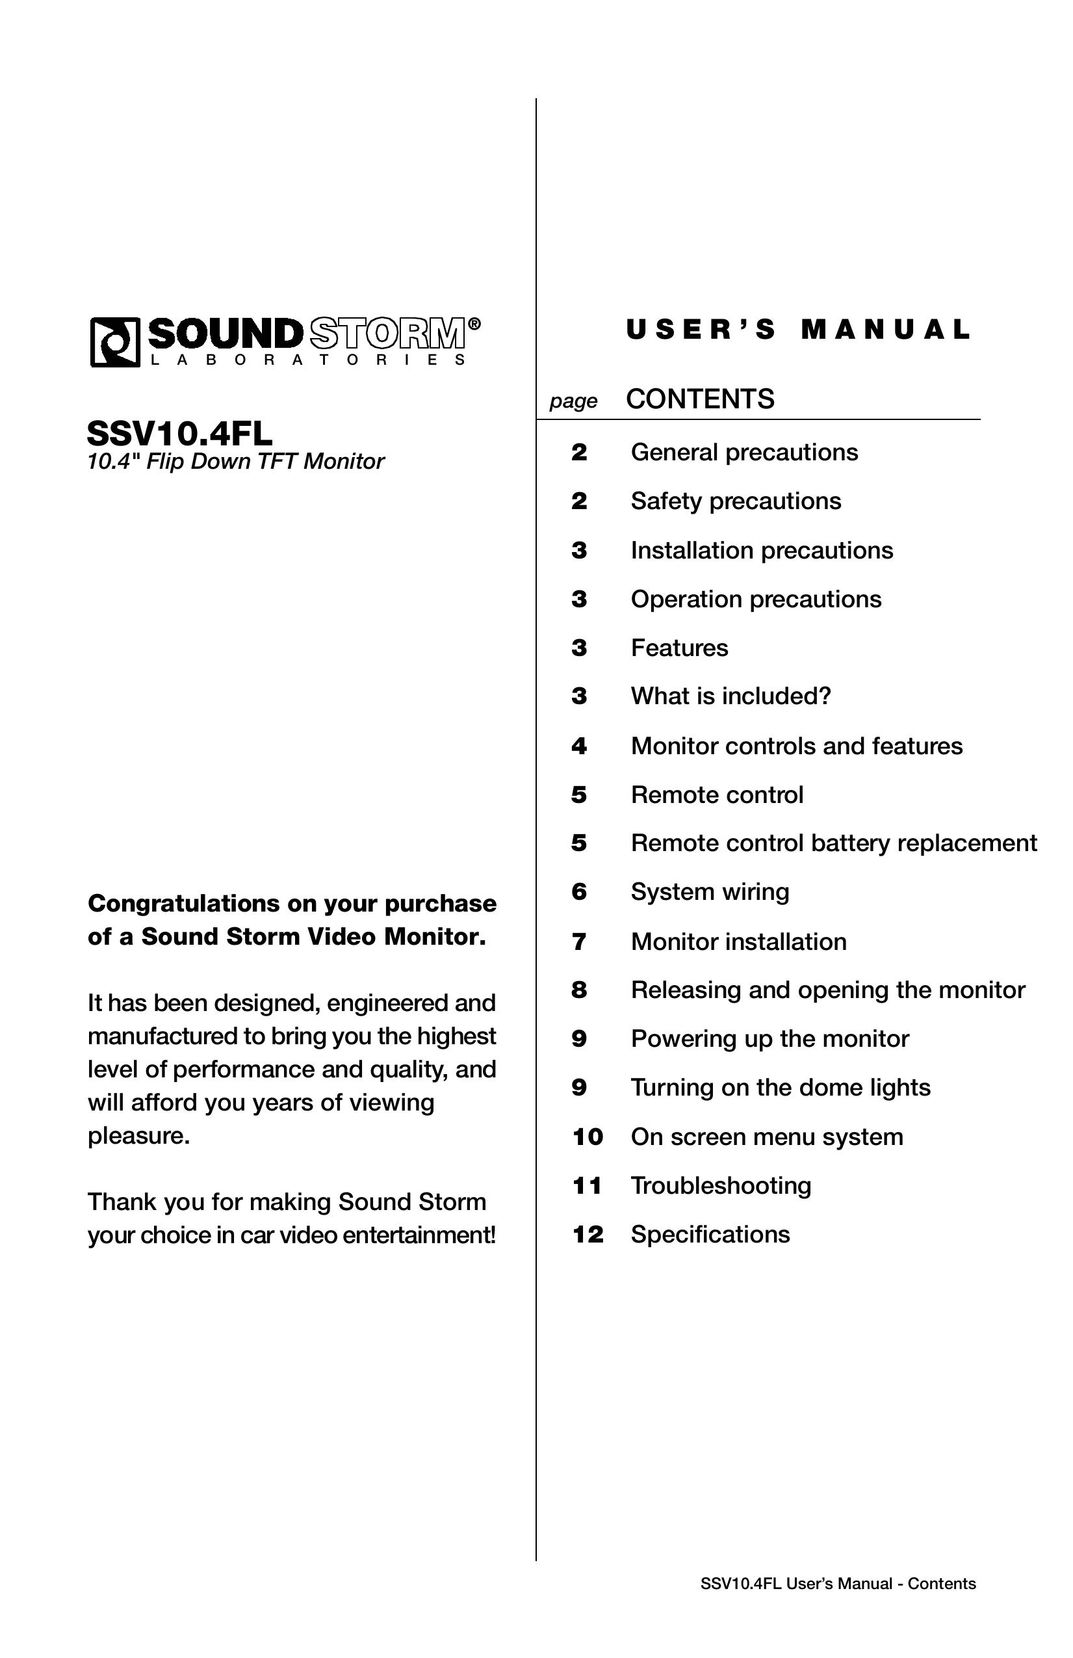 Sound Storm Laboratories SSV10.4FL Computer Monitor User Manual